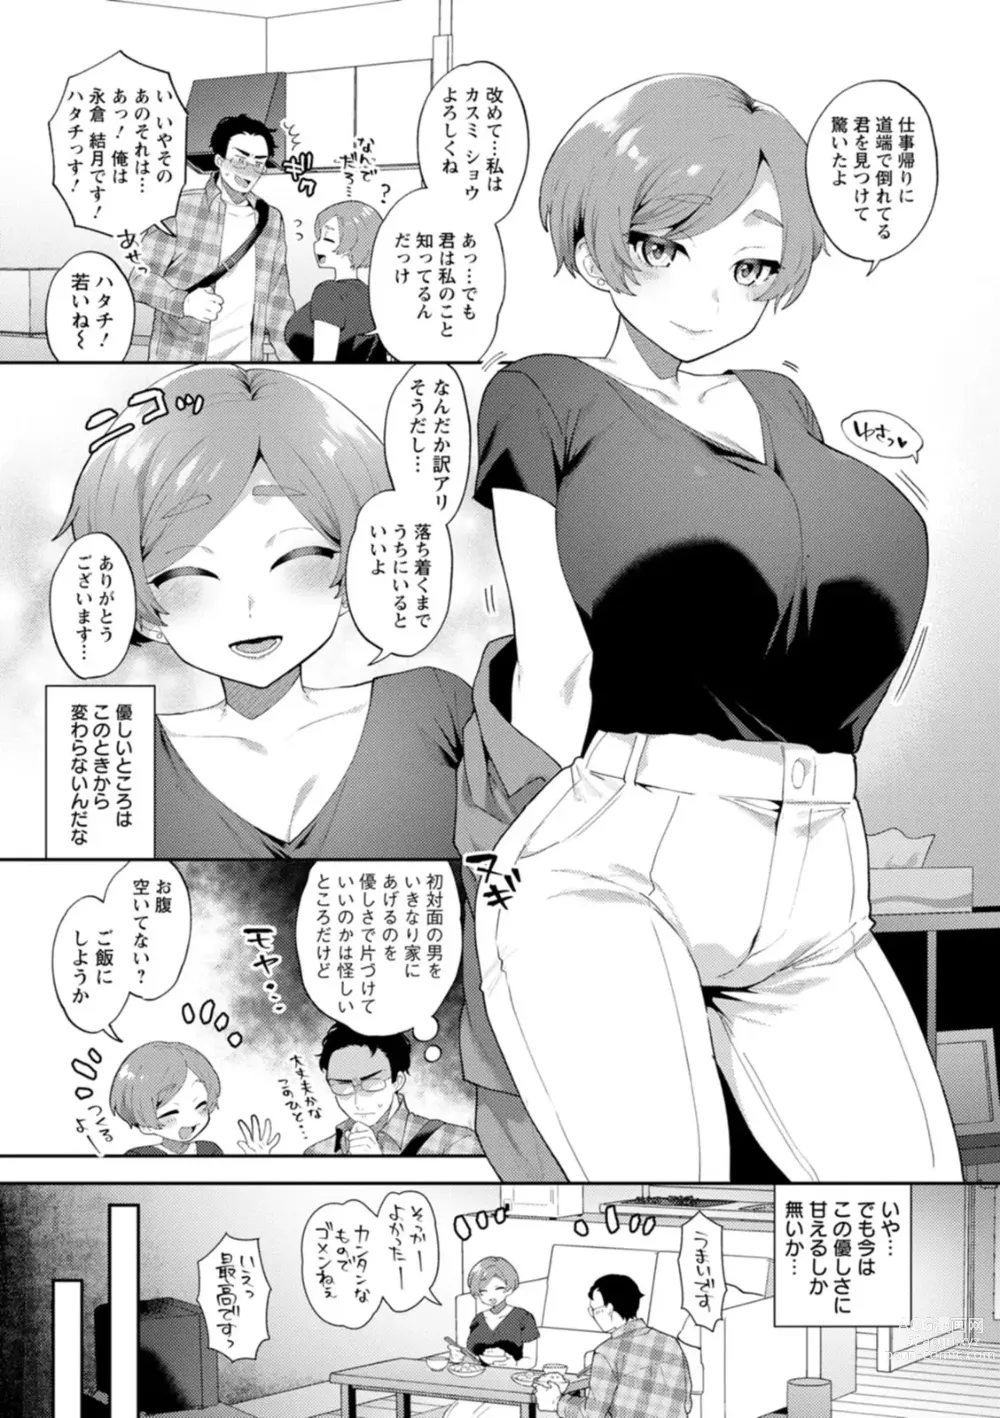 Page 13 of manga Kimito Torokete Musubarete